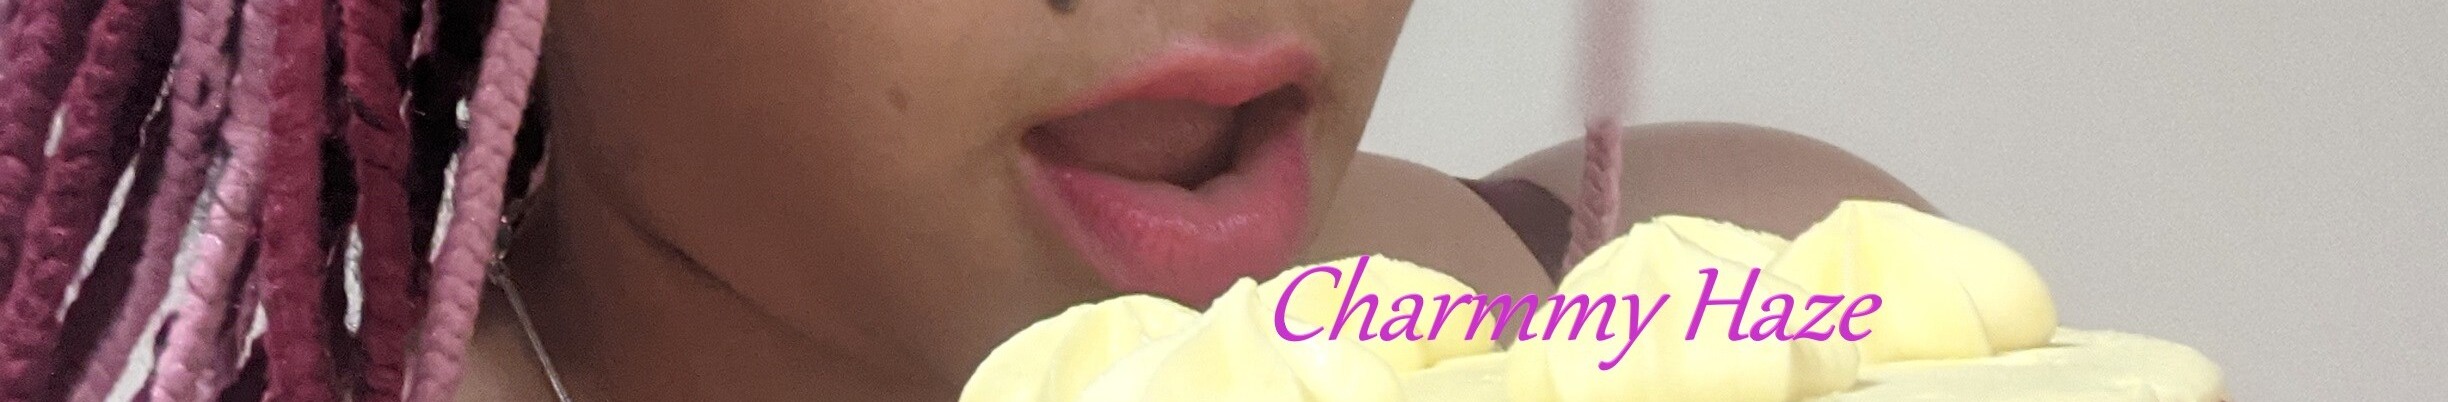 Charmmy - profile image